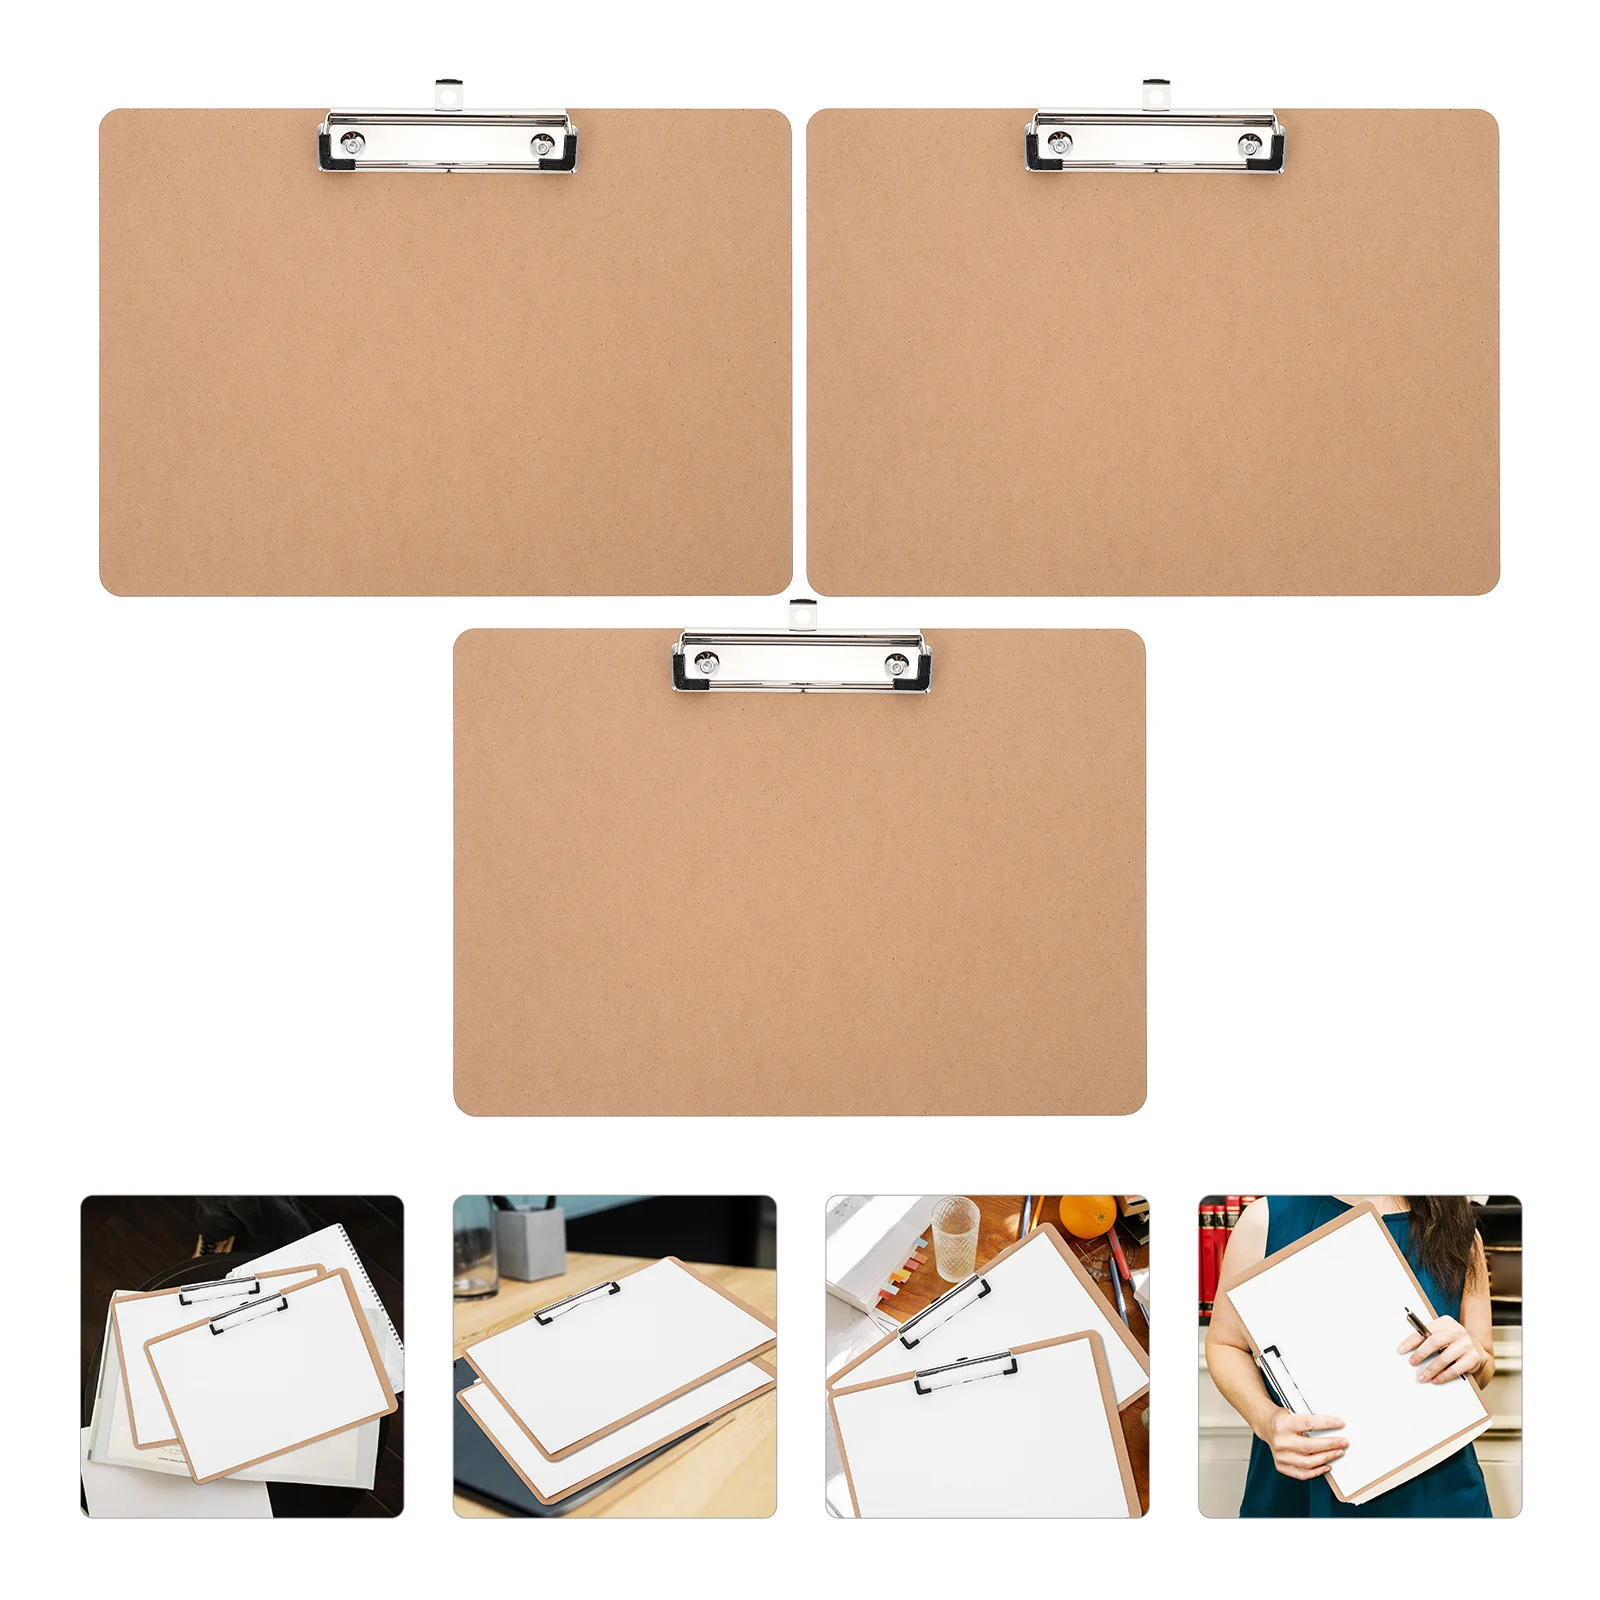 3Pcs Office Convenient Paper Clipboard Sketch Hardboard Document Clipboard Office Clip Boards for Students School Office